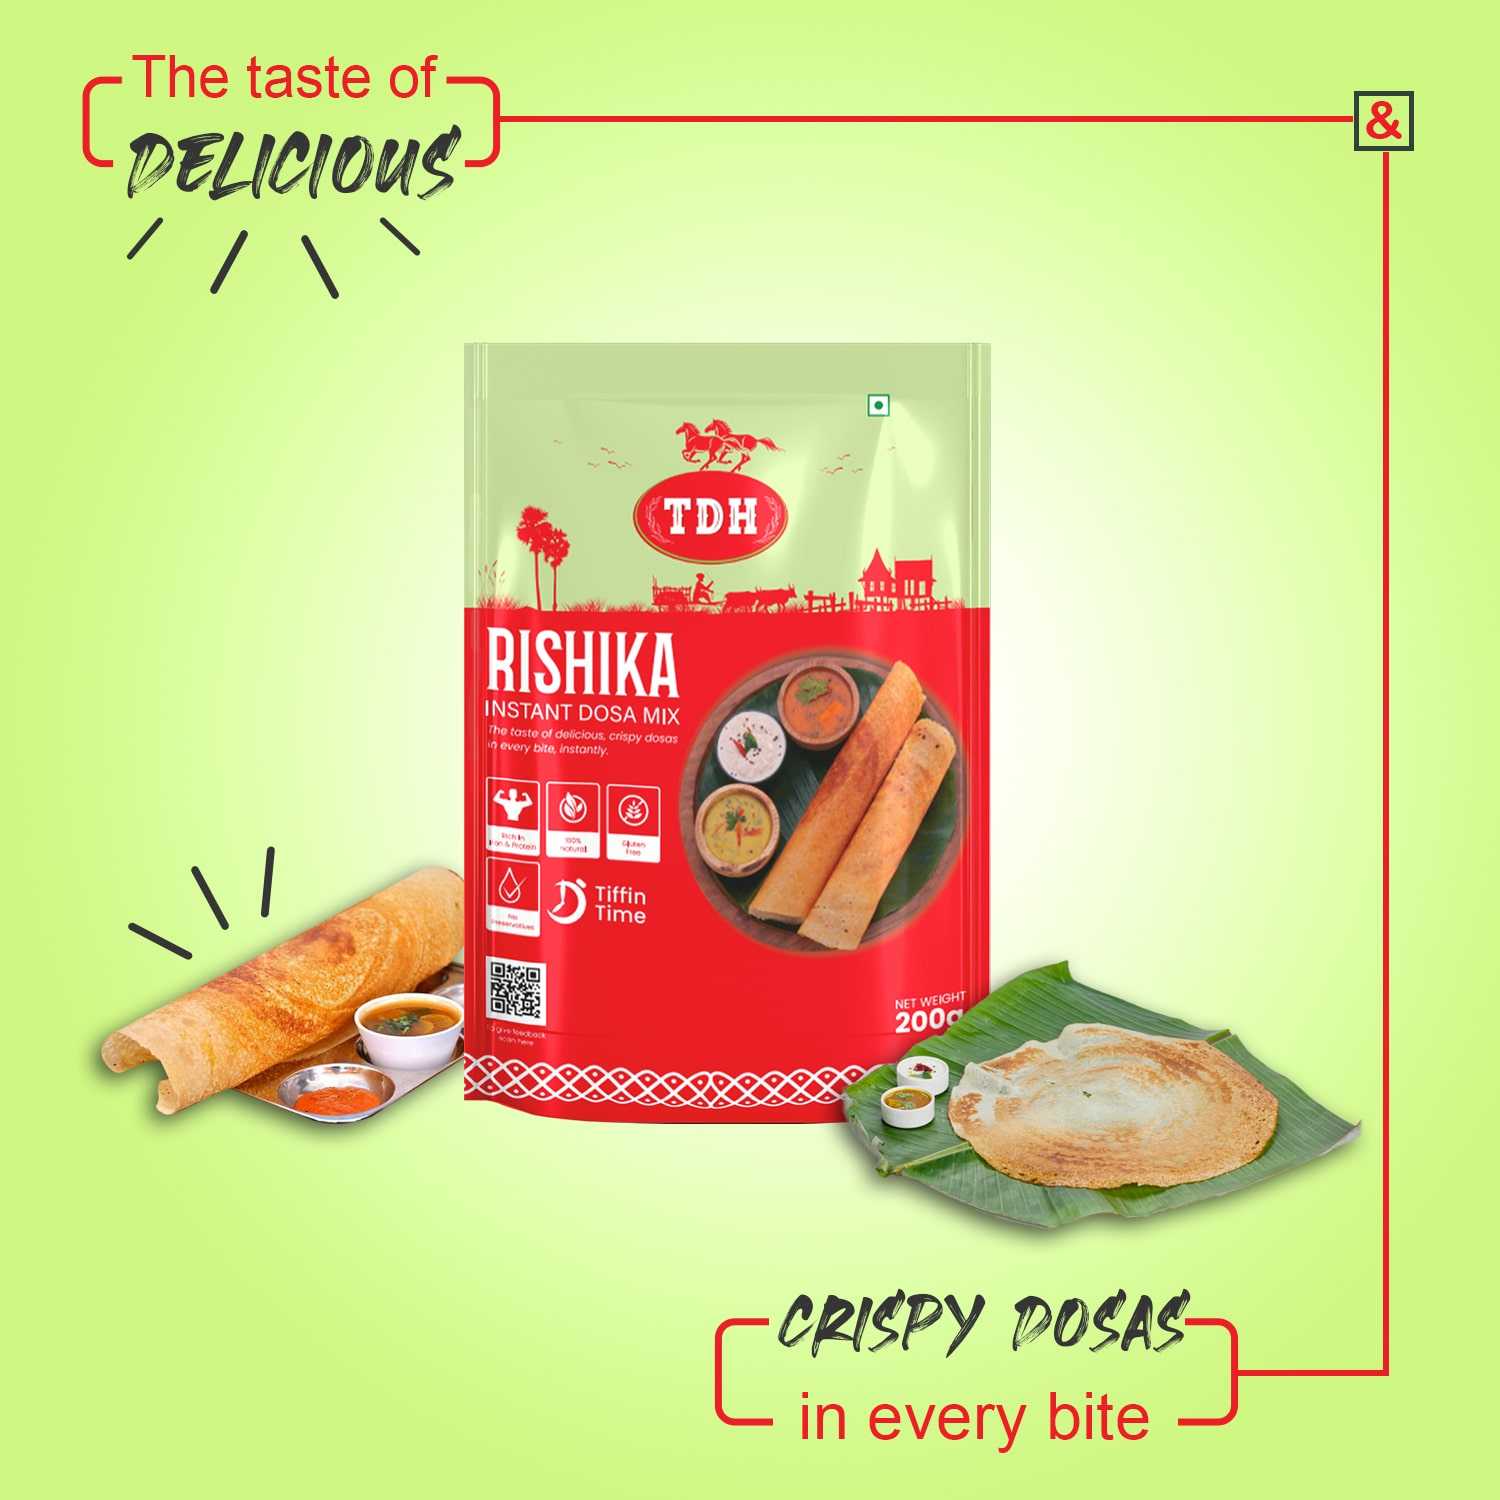 Rishika Instant Dosa Mix product image 4 tdhfoodproducts